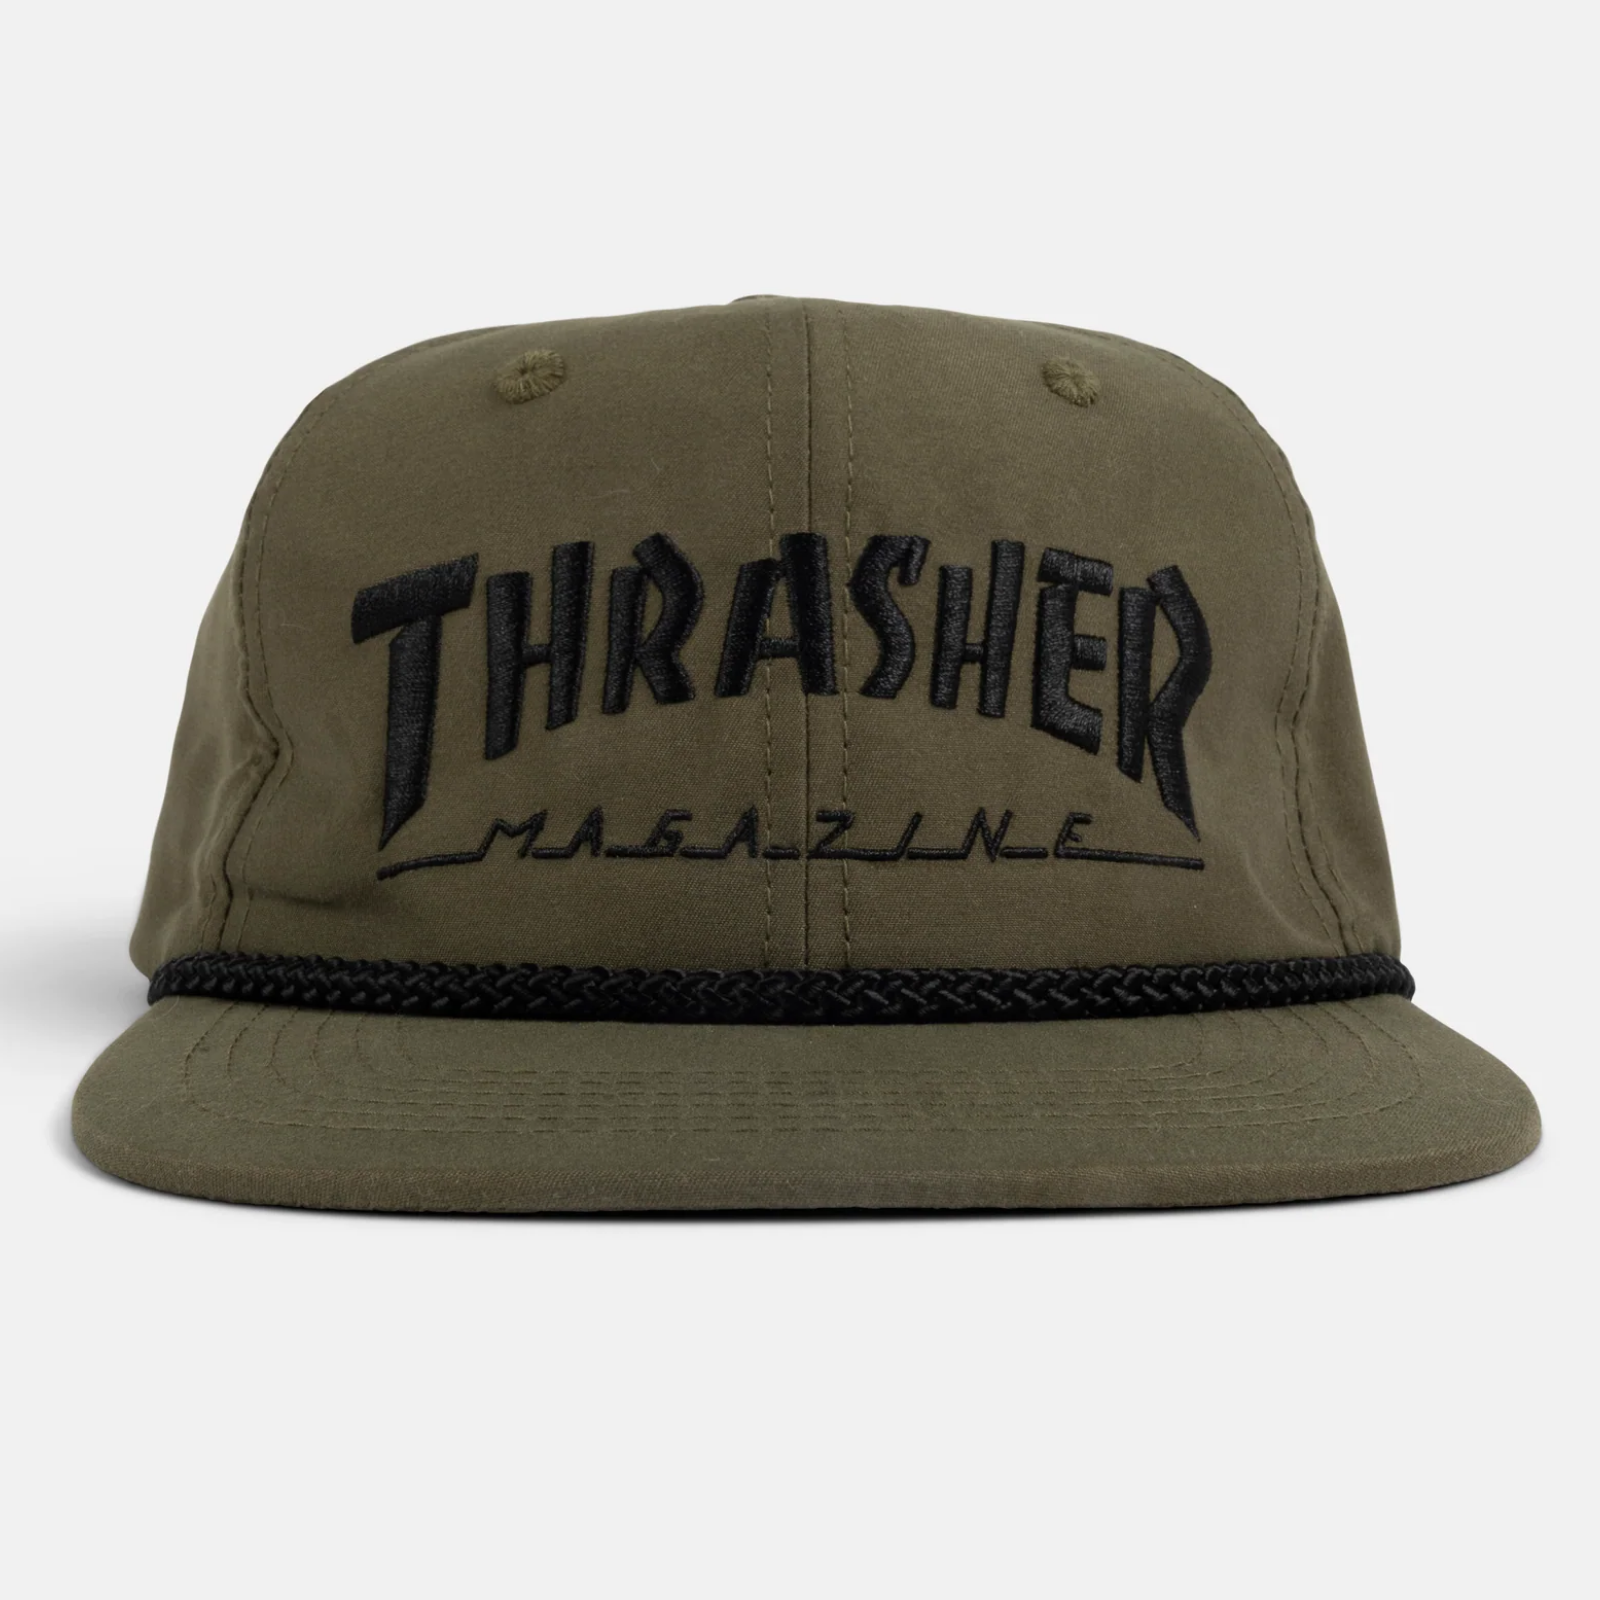 Thrasher Mag. Rope Snapback Olive/Black